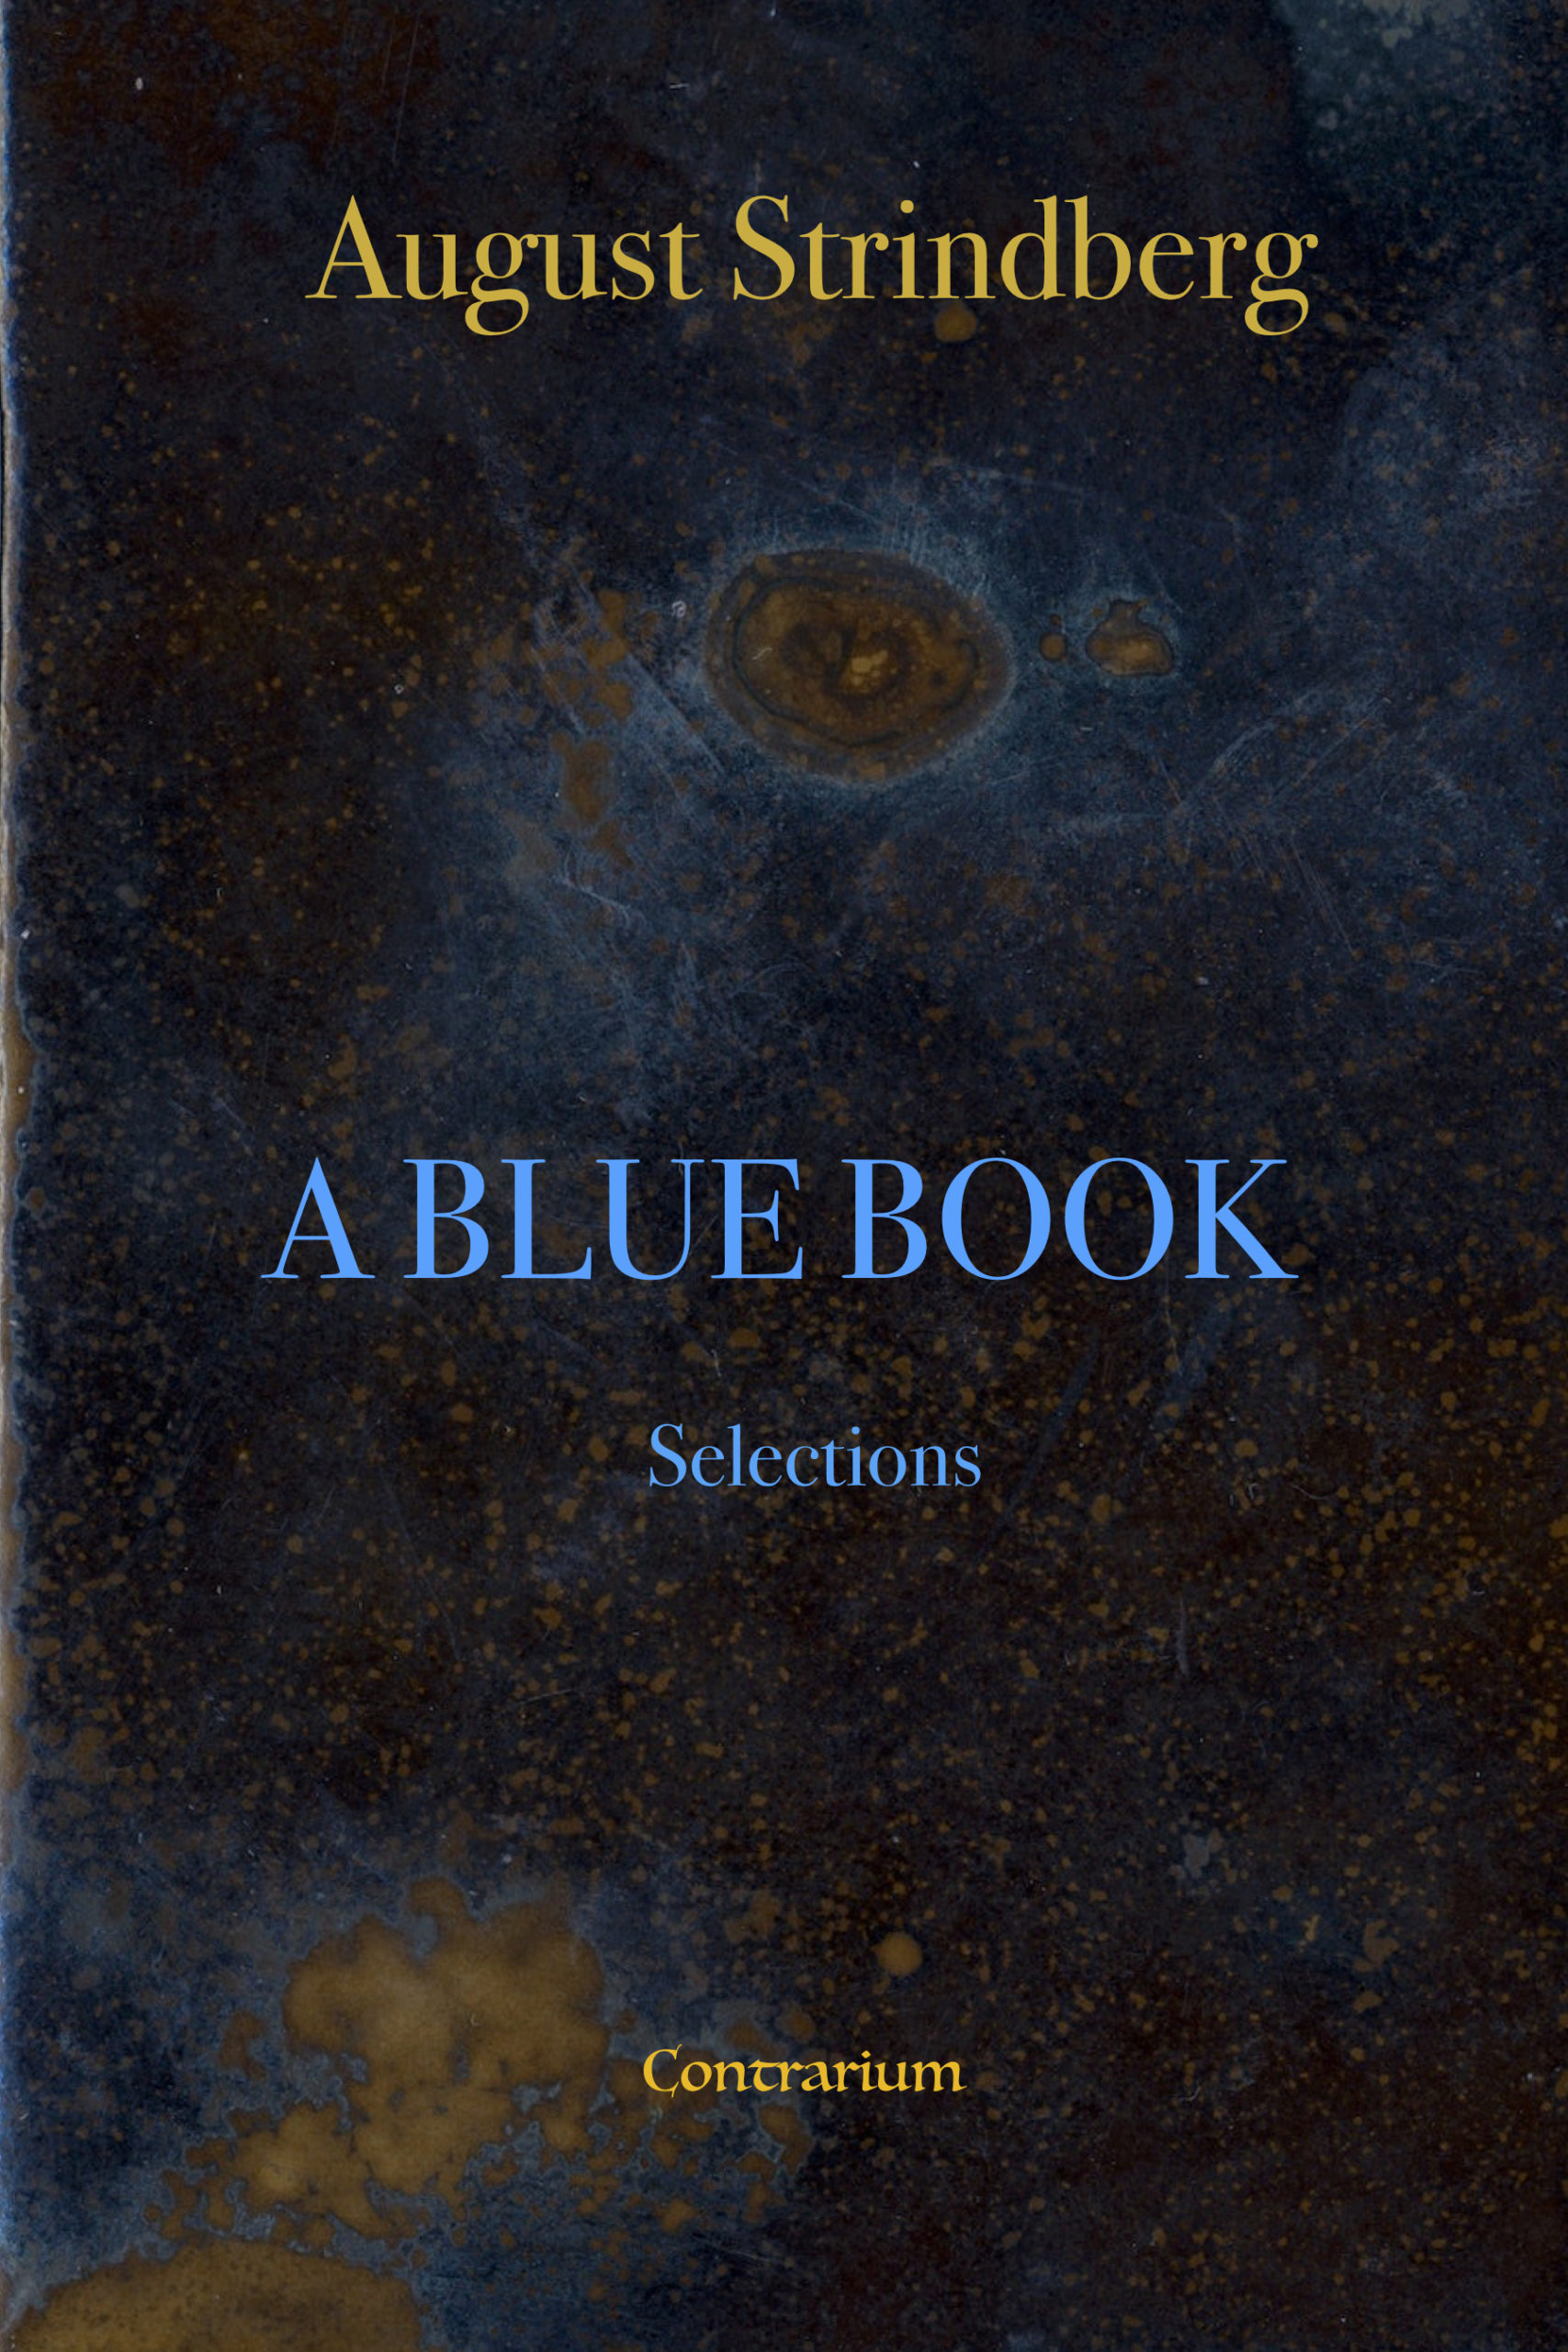 “The Blue Book” – August Strindberg